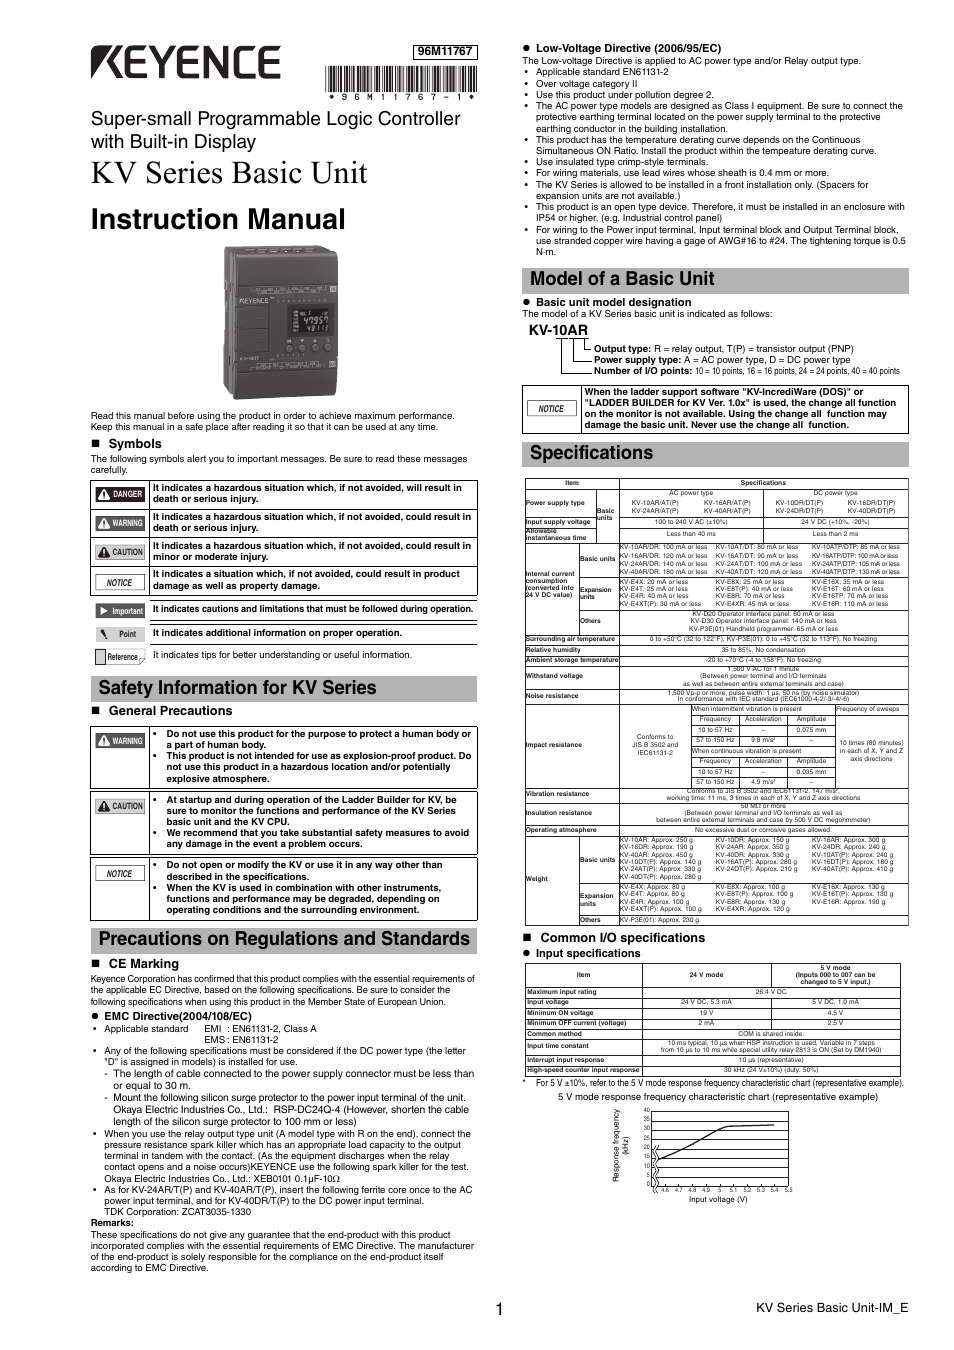 KEYENCE KV Series User Manual | 6 pages | Original mode